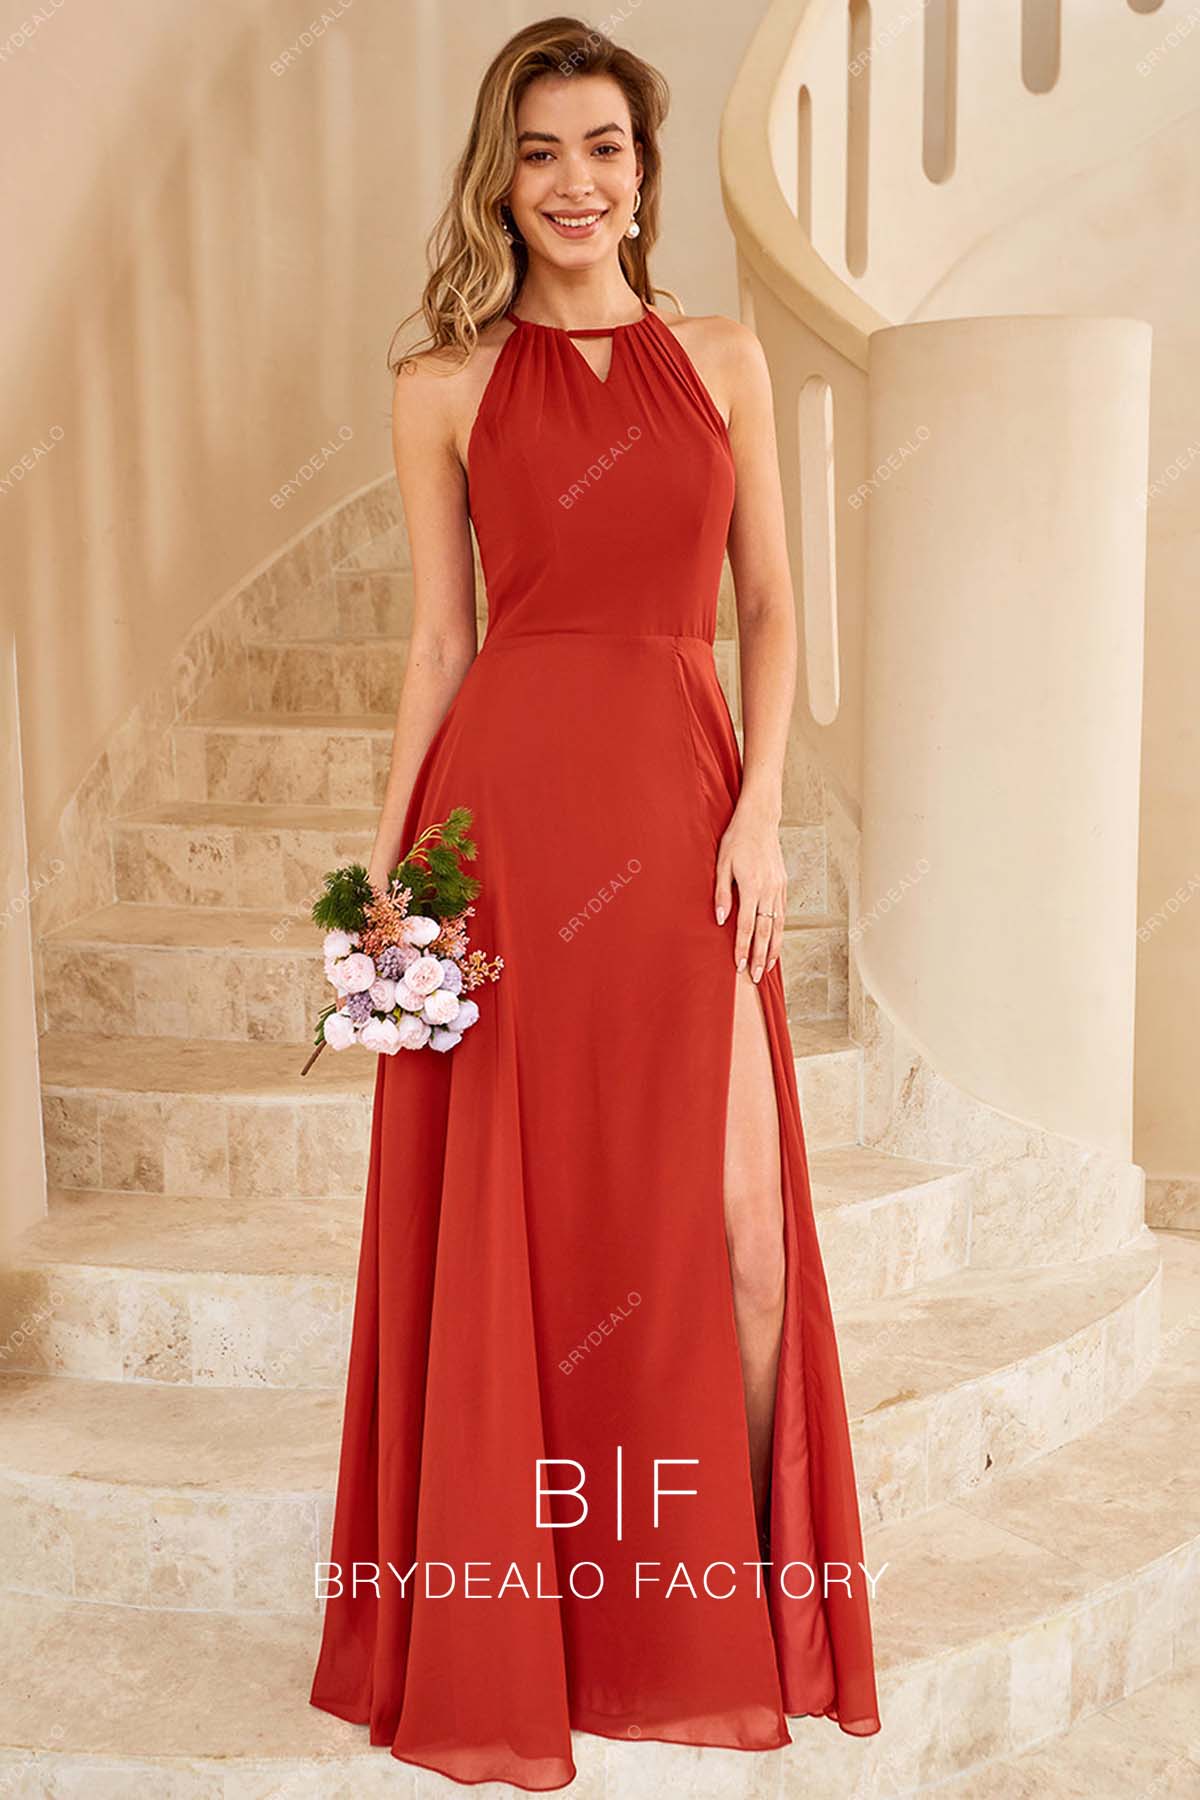 keyhole neck red chiffon slit bridesmaid dress